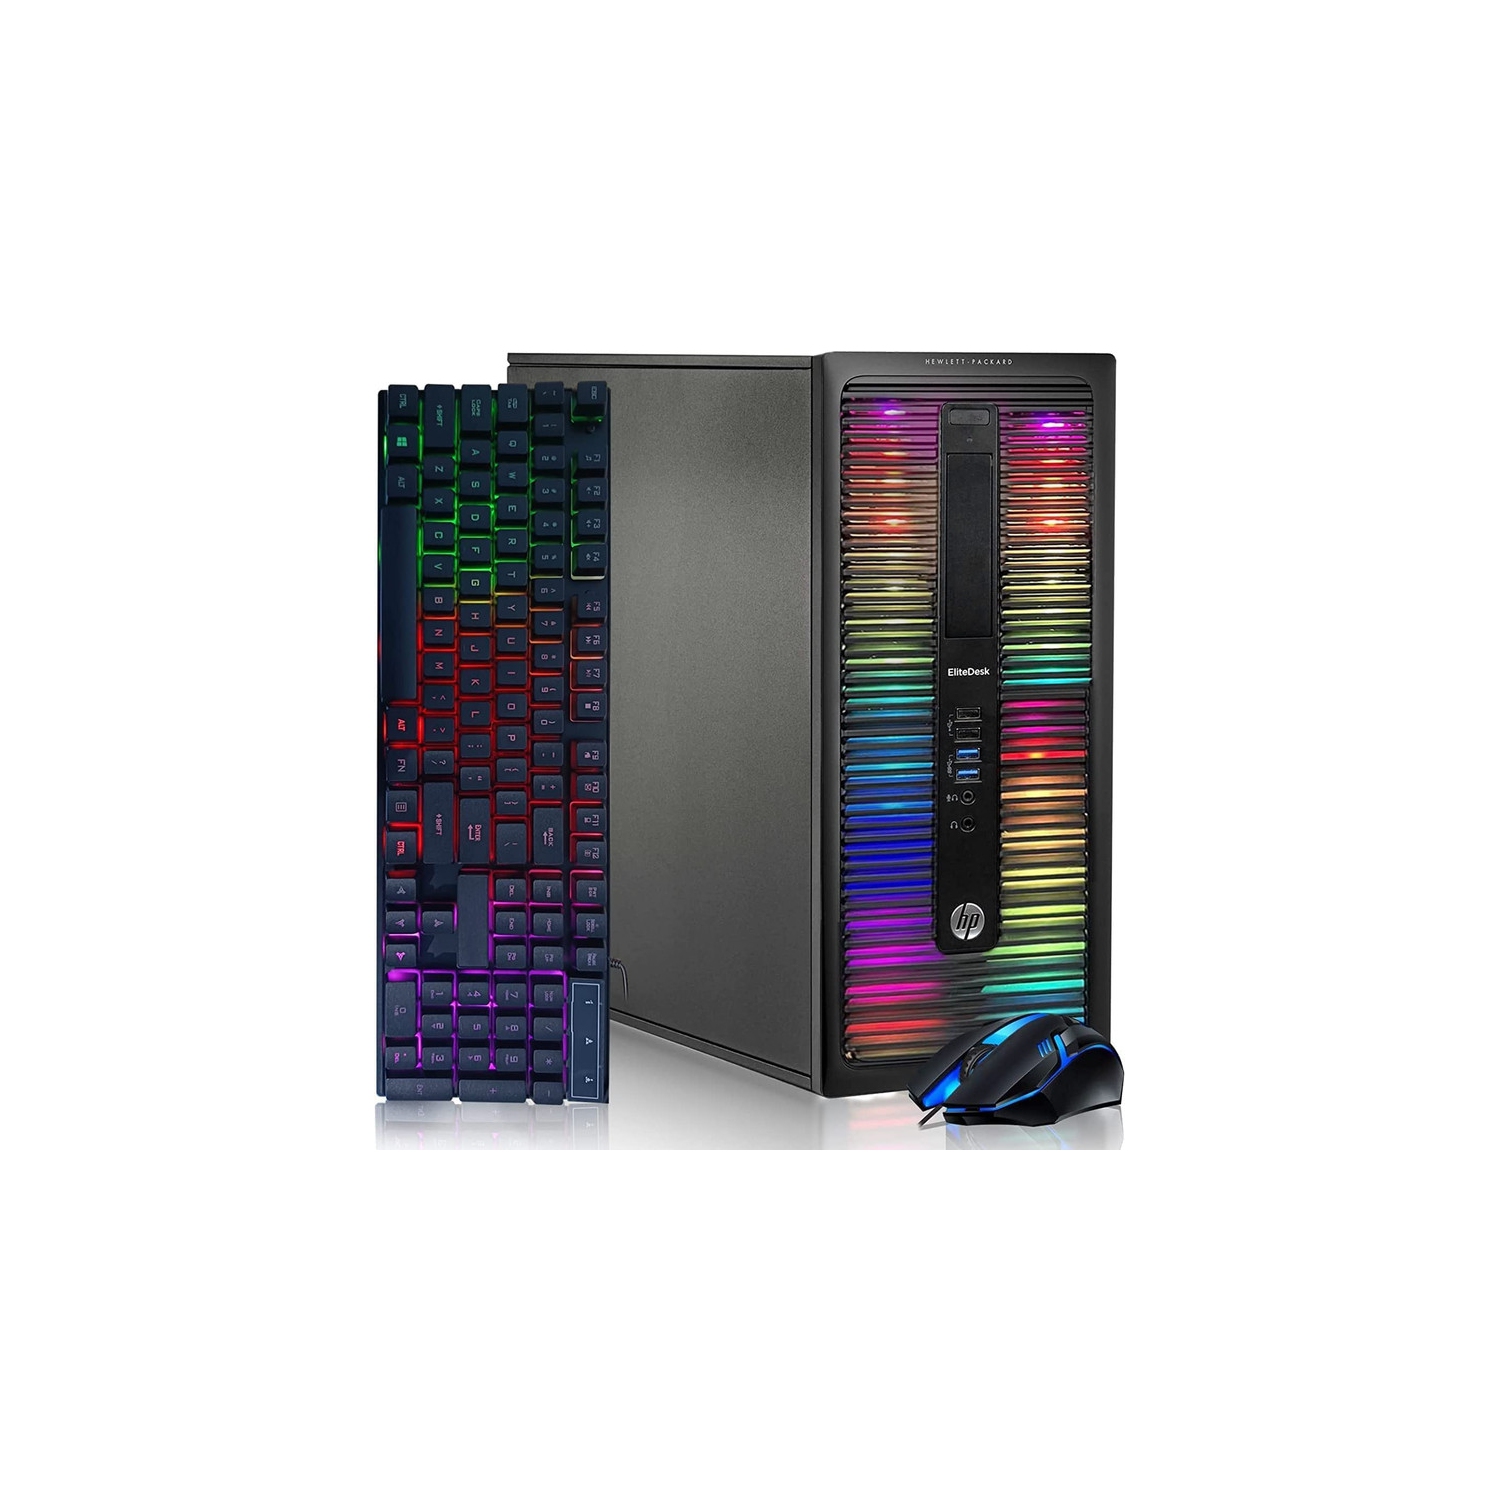 HP RGB Gaming Desktop Computer - Intel Core I7 up to 3.9GHz, 32GB, 1T SSD, GeForce GTX 1660 Super GDDR6 6G, RGB KB & MS, WiFi & BT 5.0, Win 10 Pro -Refurbished Excellent